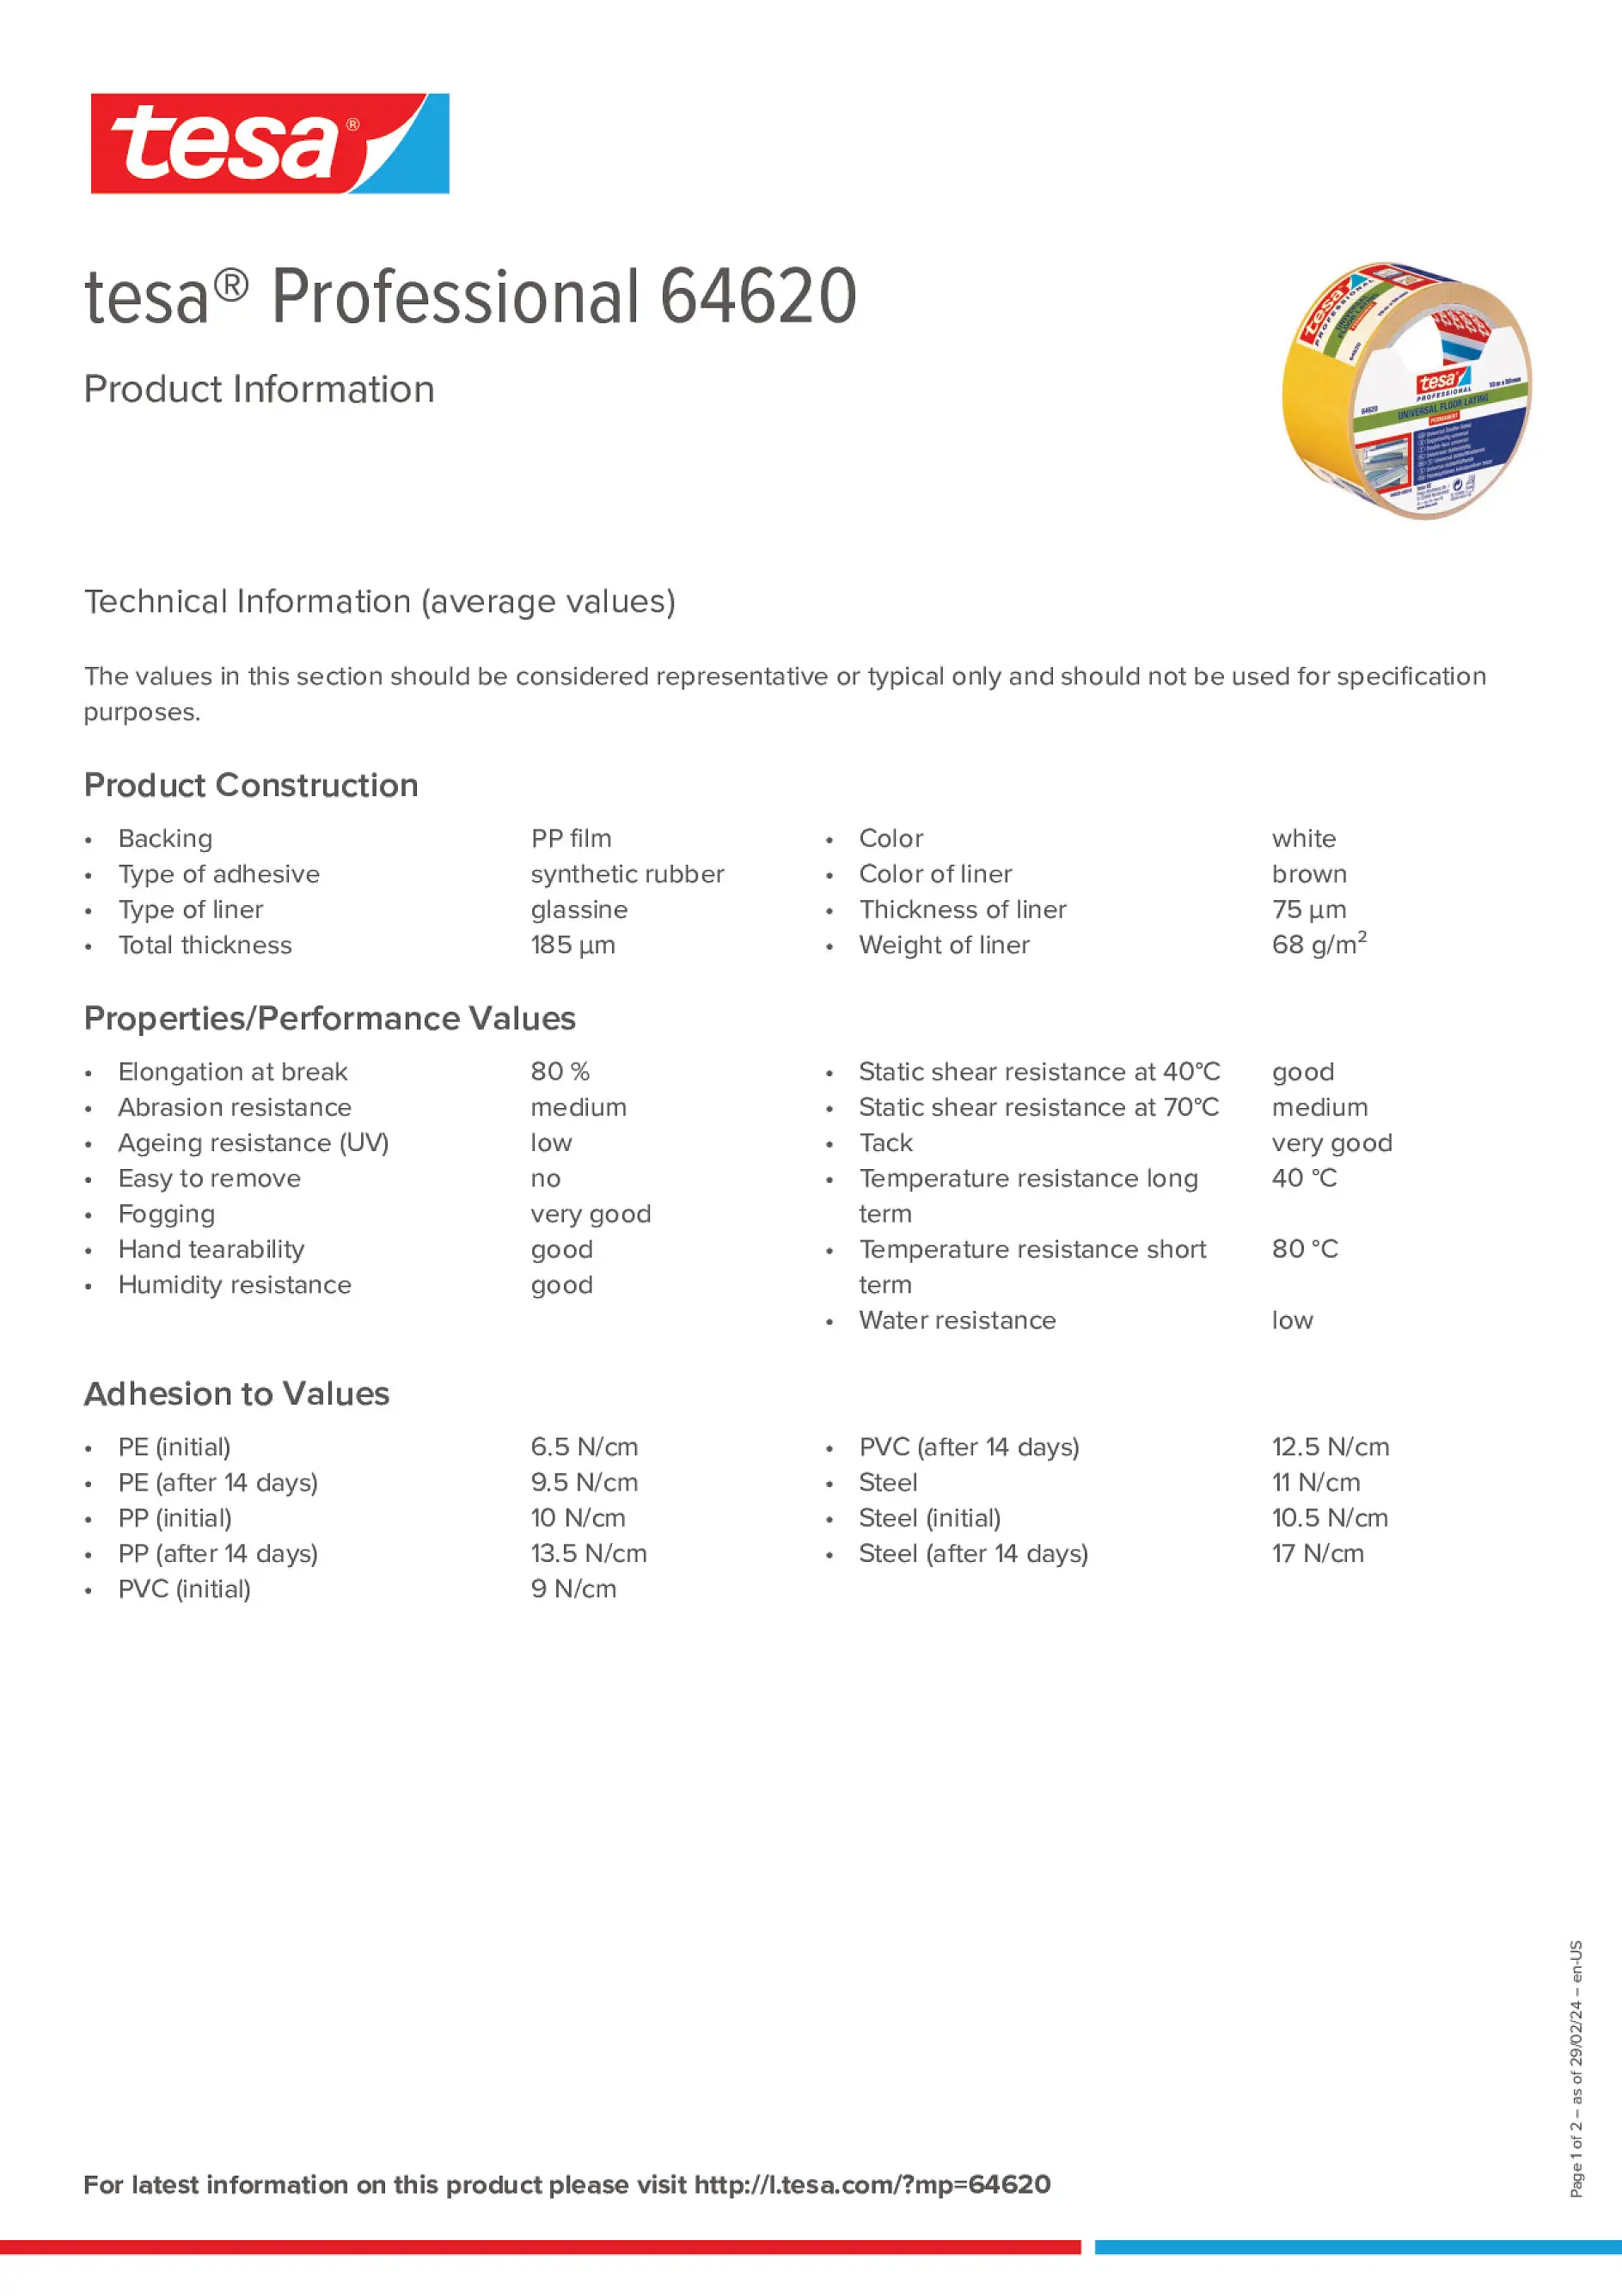 Product information_tesa® Professional 64620_en